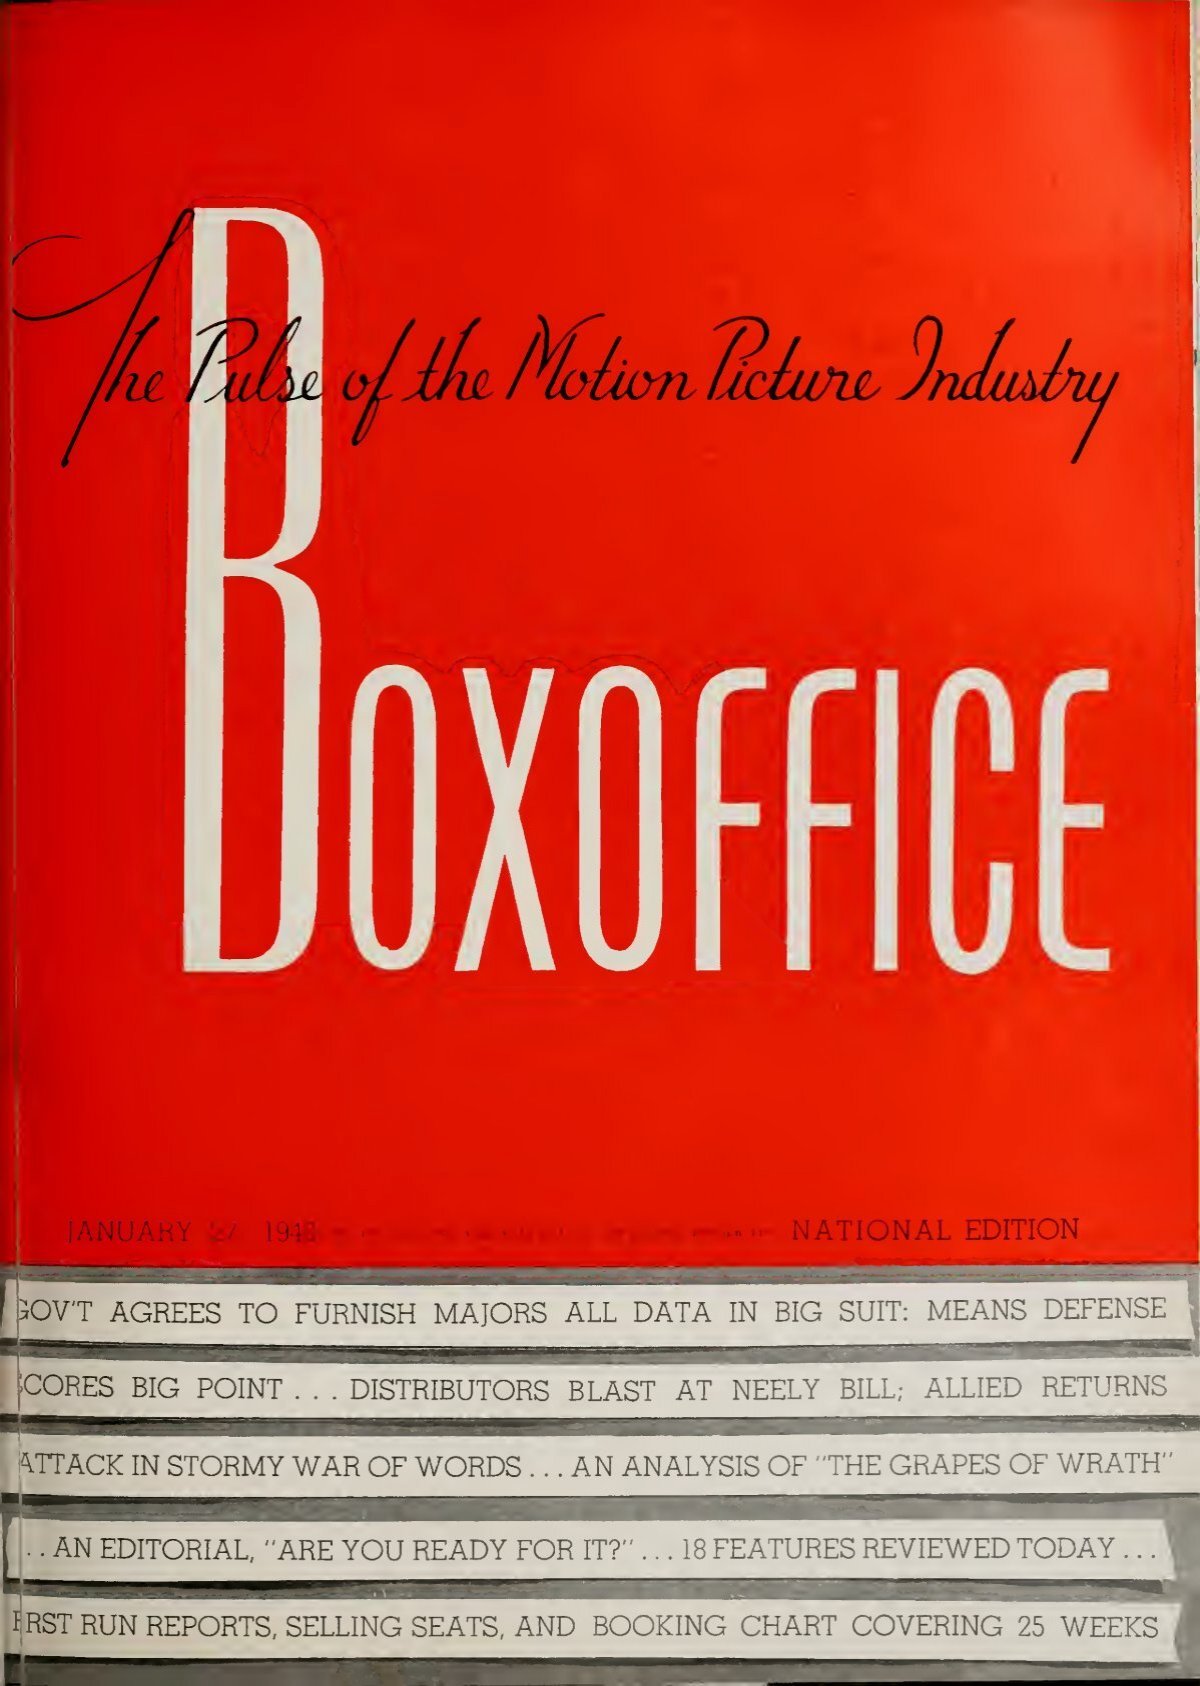 Boxoffice - Jan. 27, 1940